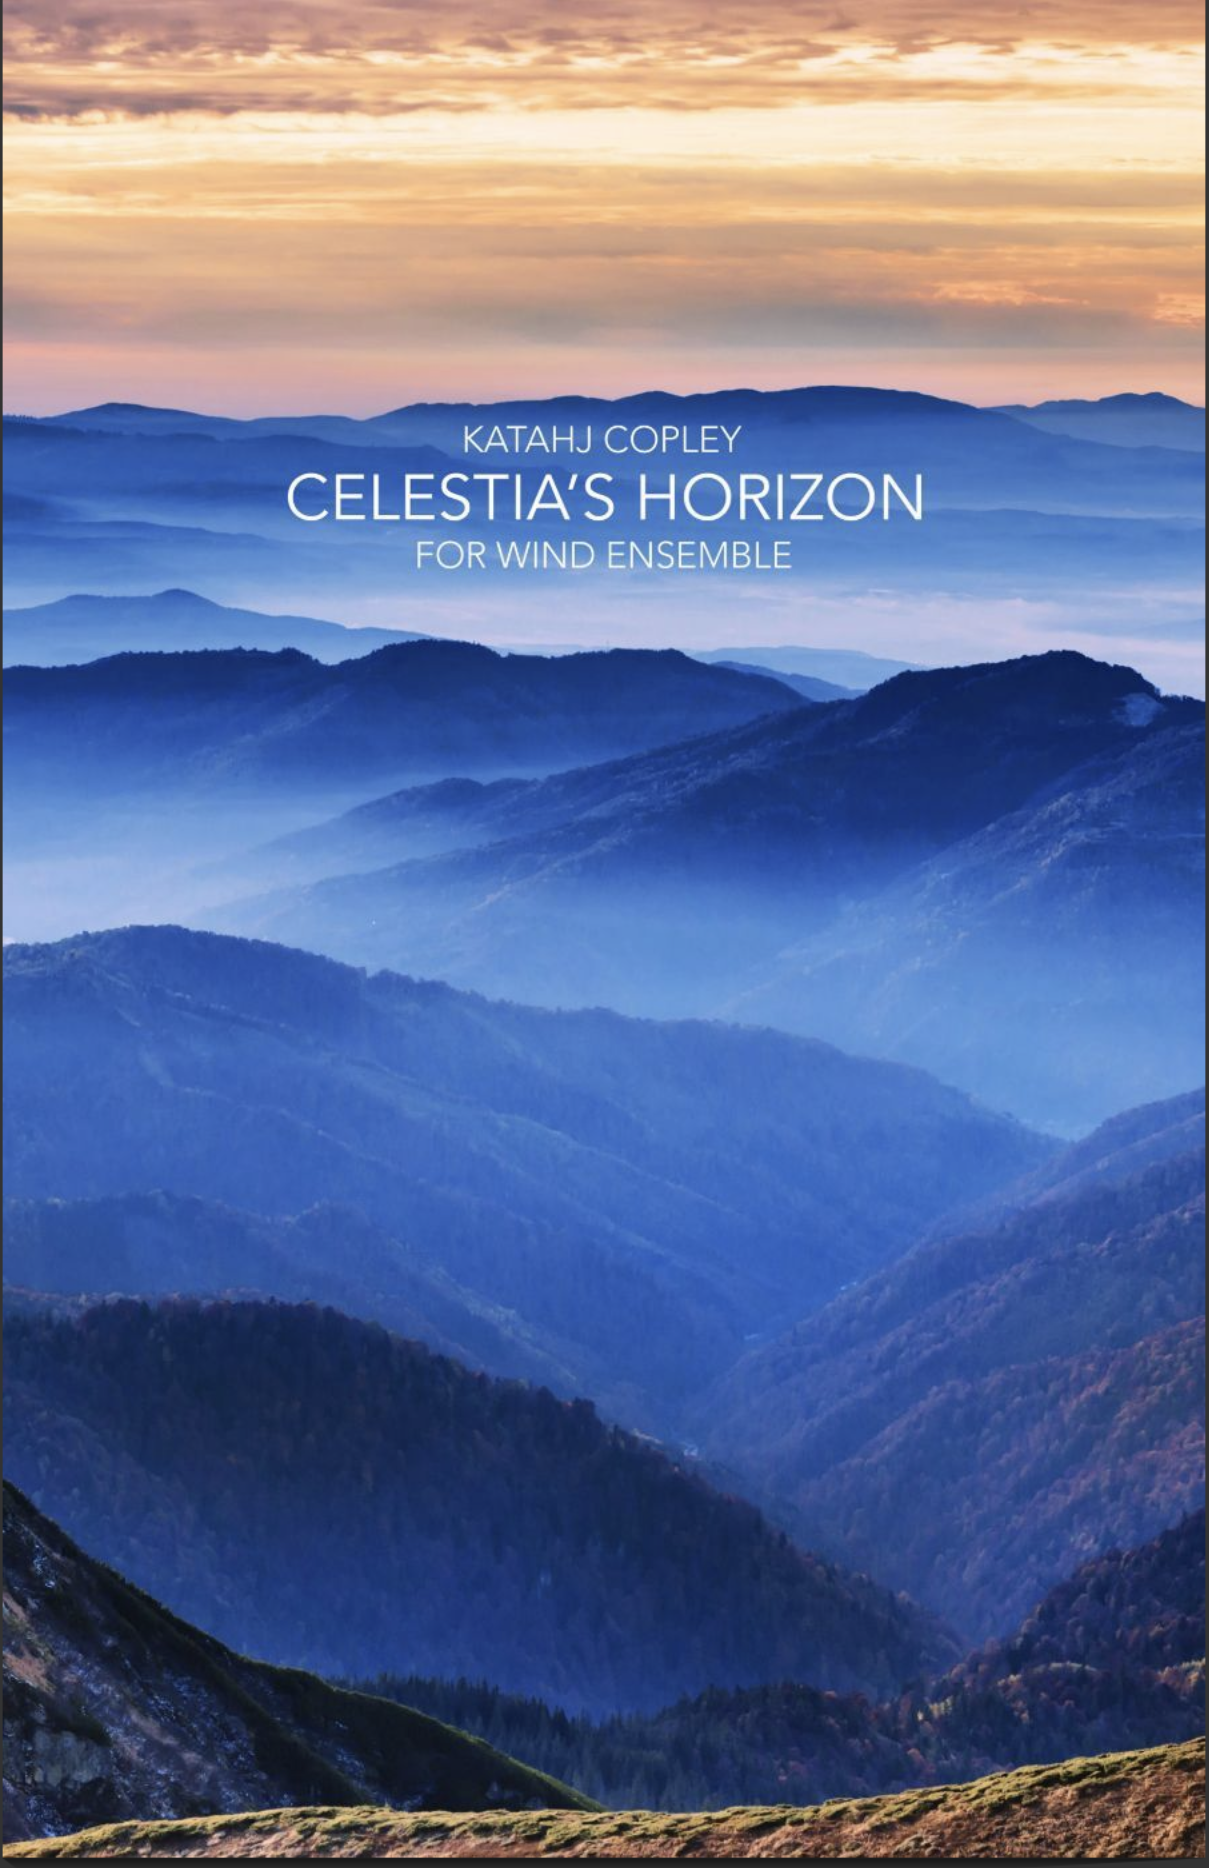 Celestia's Horizon (Score Only) by Katahj Copley